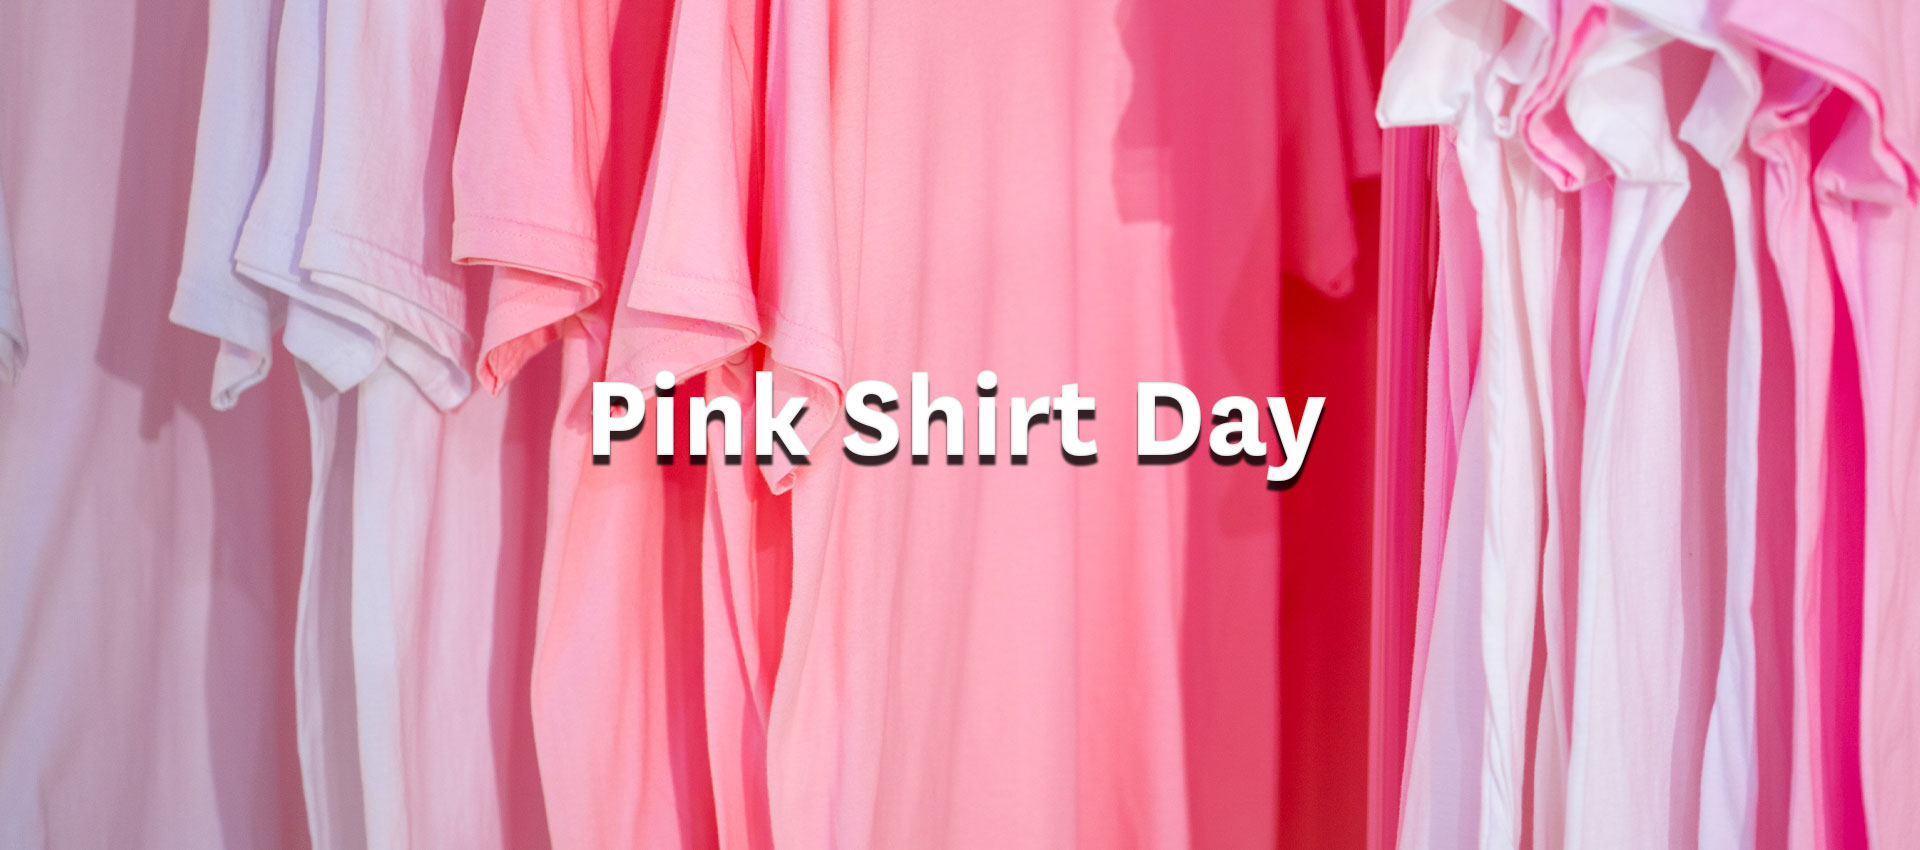 https://www.temanawa.co.nz/wp-content/uploads/2021/05/TM-Pink-Shirt-Day.jpg